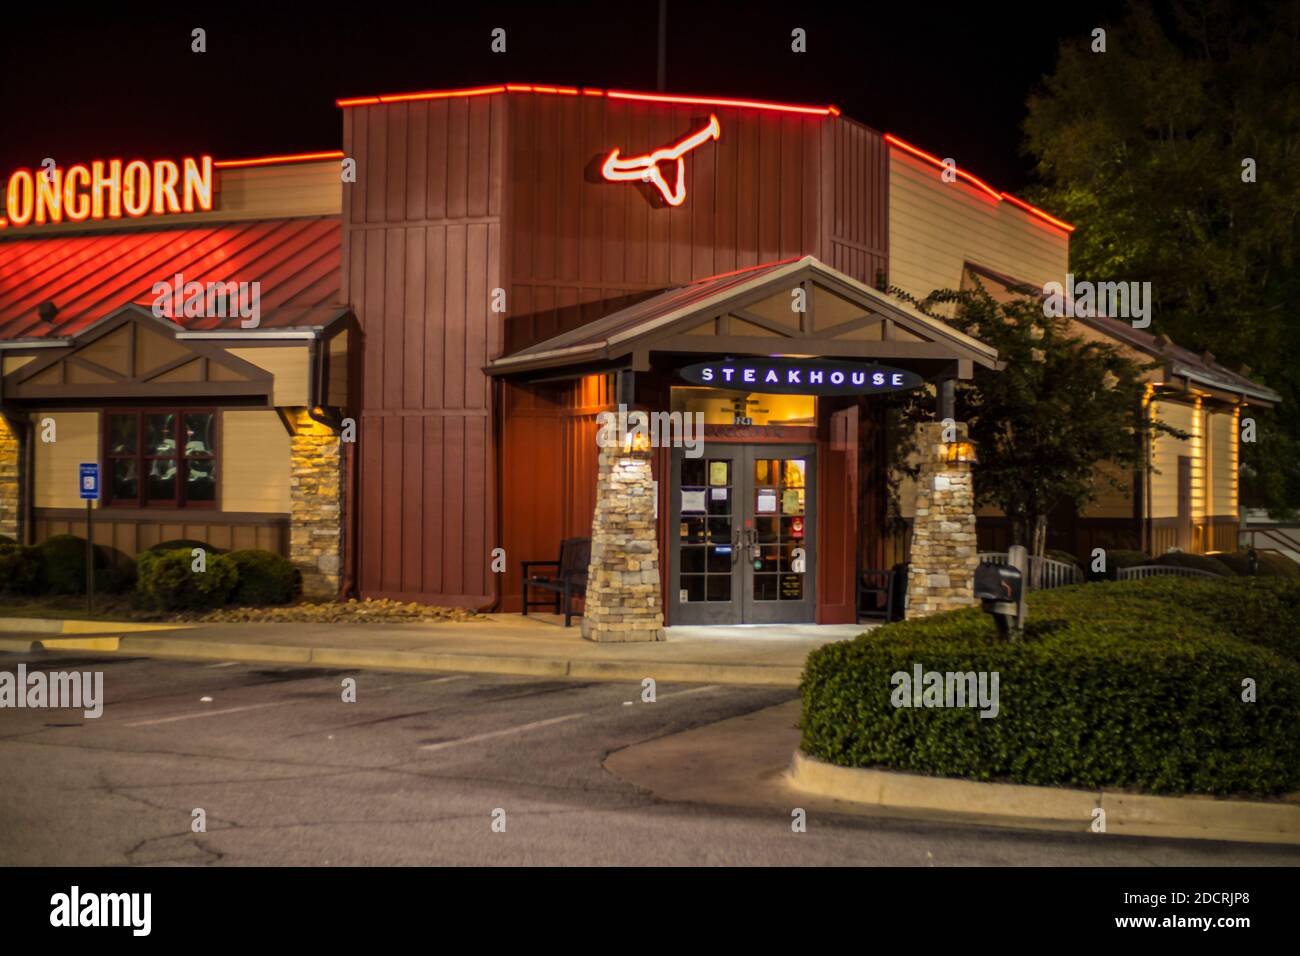 North Augusta, SC / USA - 11 20 20: LongHorn Steakhouse Restaurant entrance at night Stock Photo